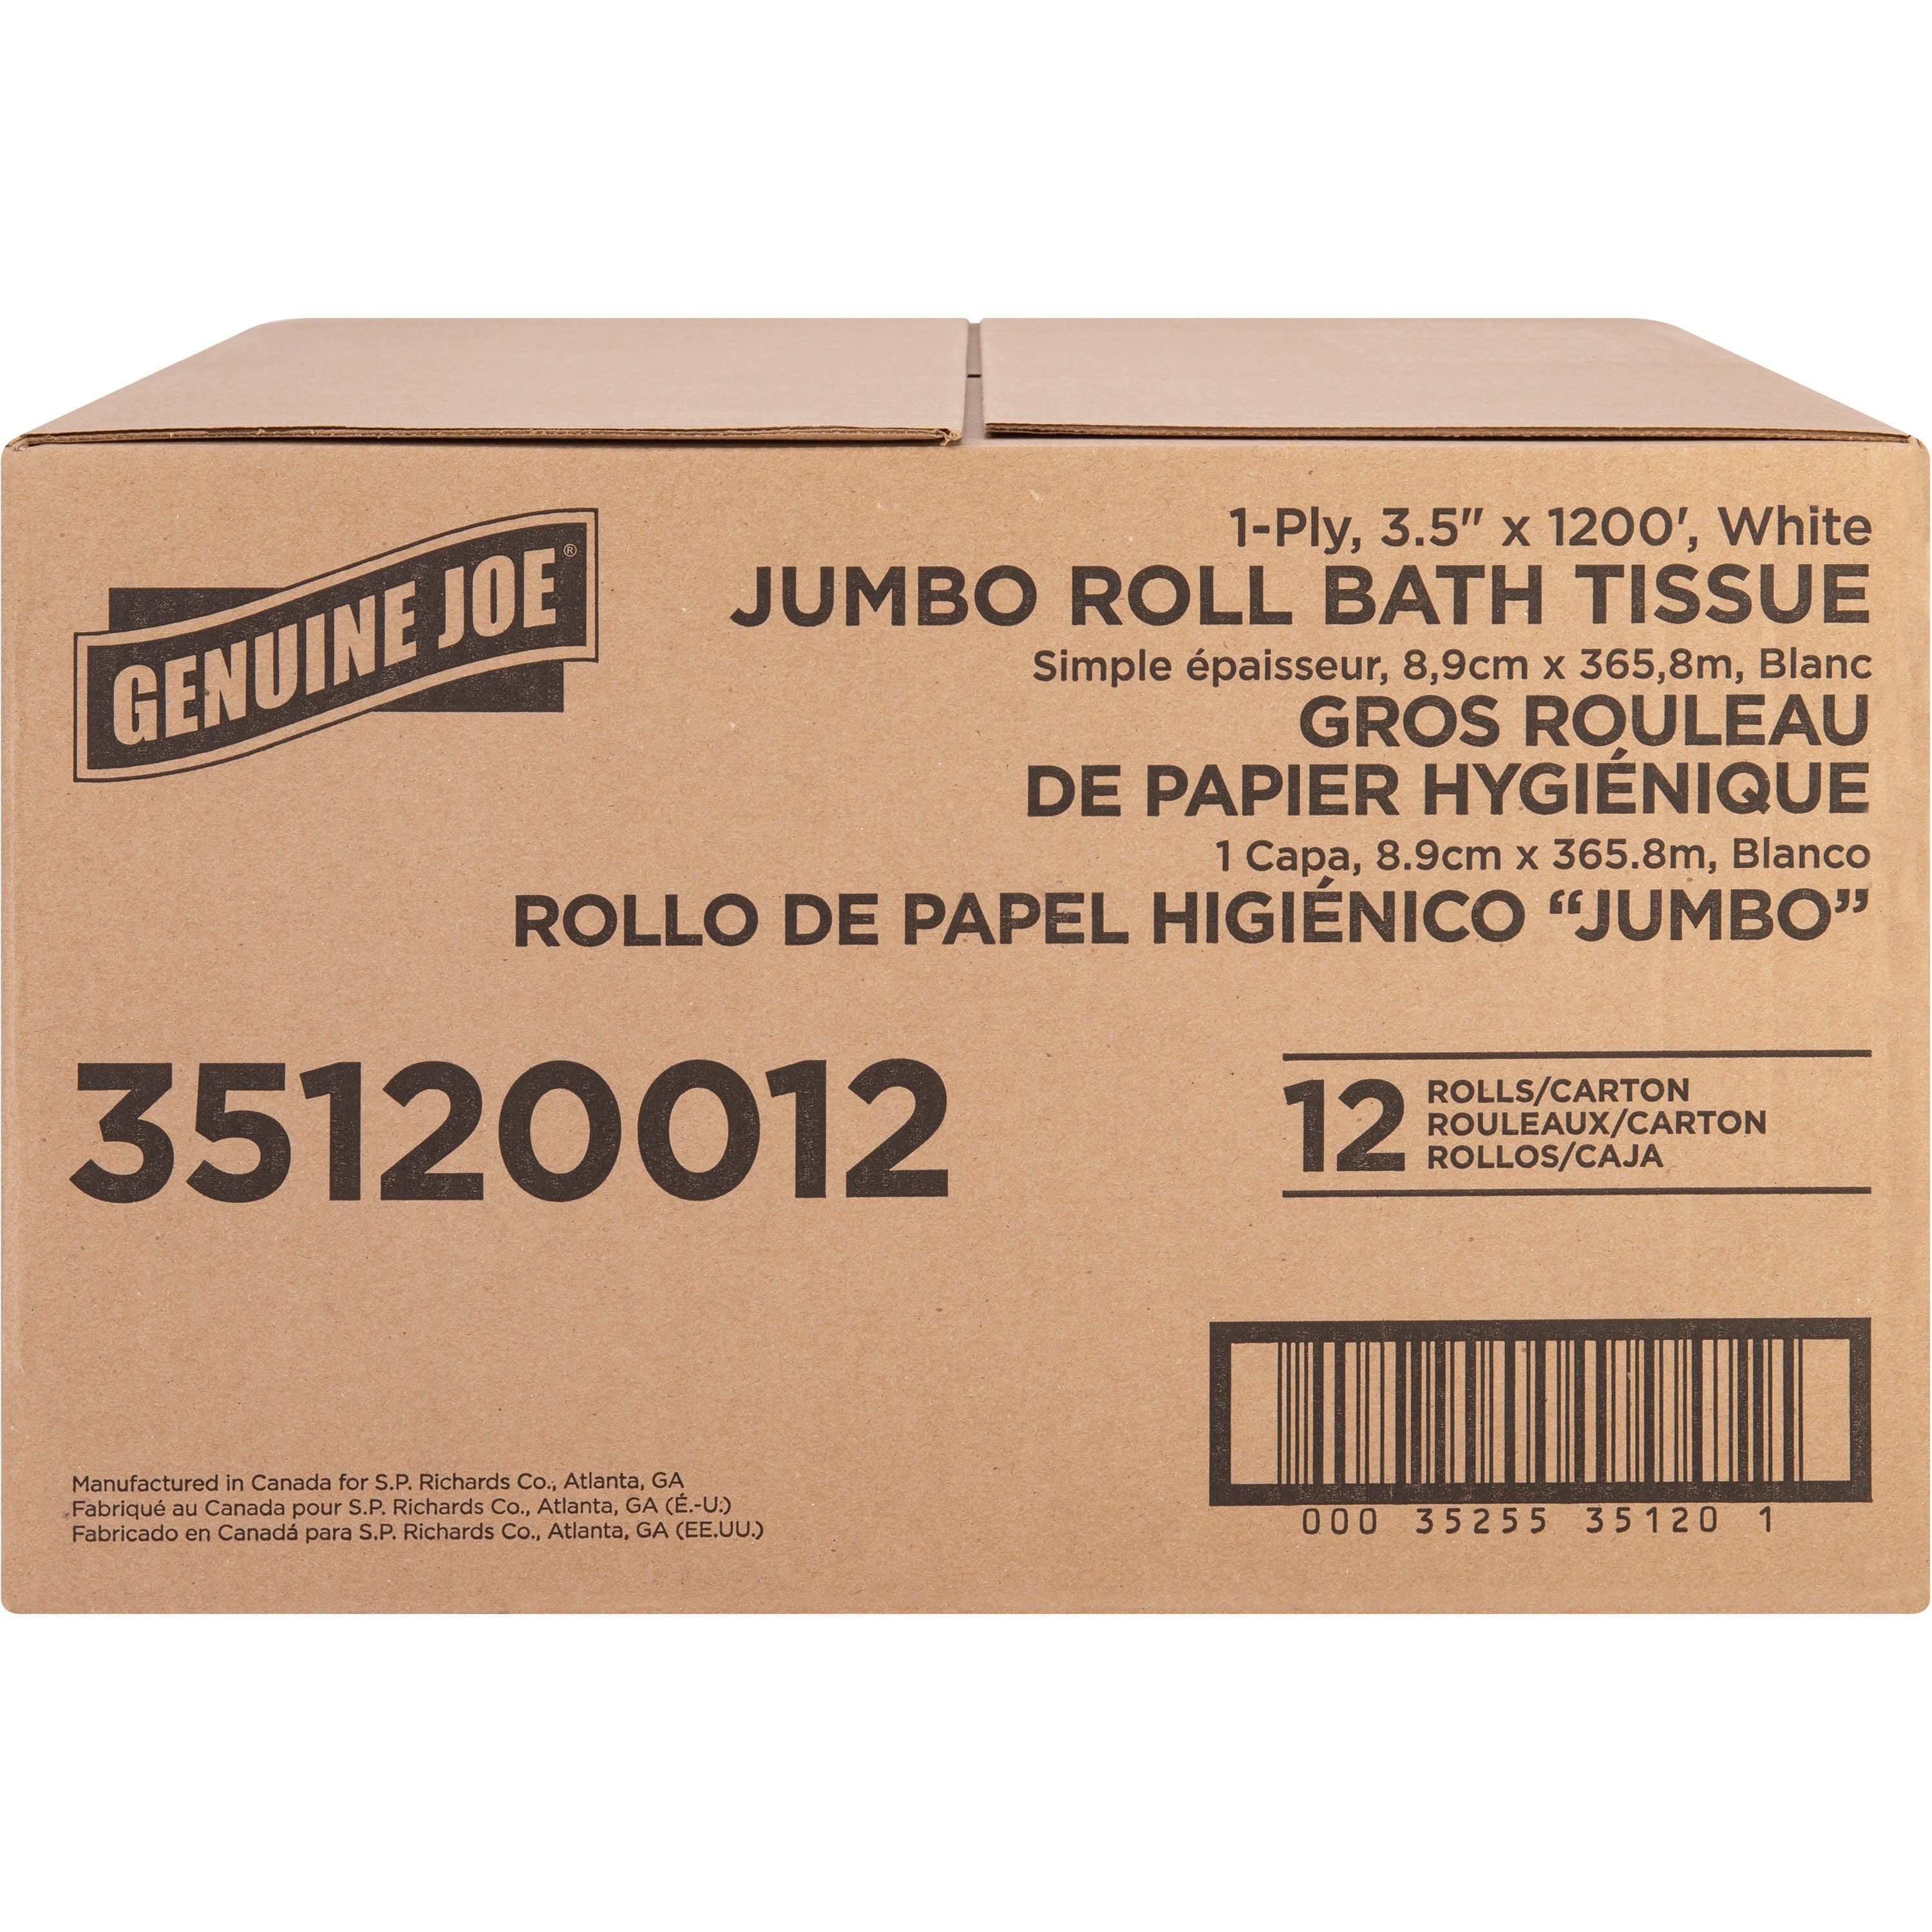 genuine-joe-1-ply-jumbo-roll-bath-tissue-1-ply-363-x-1200-ft-888-roll-diameter-white-fiber-sewer-safe-septic-safe-for-bathroom-12-carton_gjo35120012 - 3